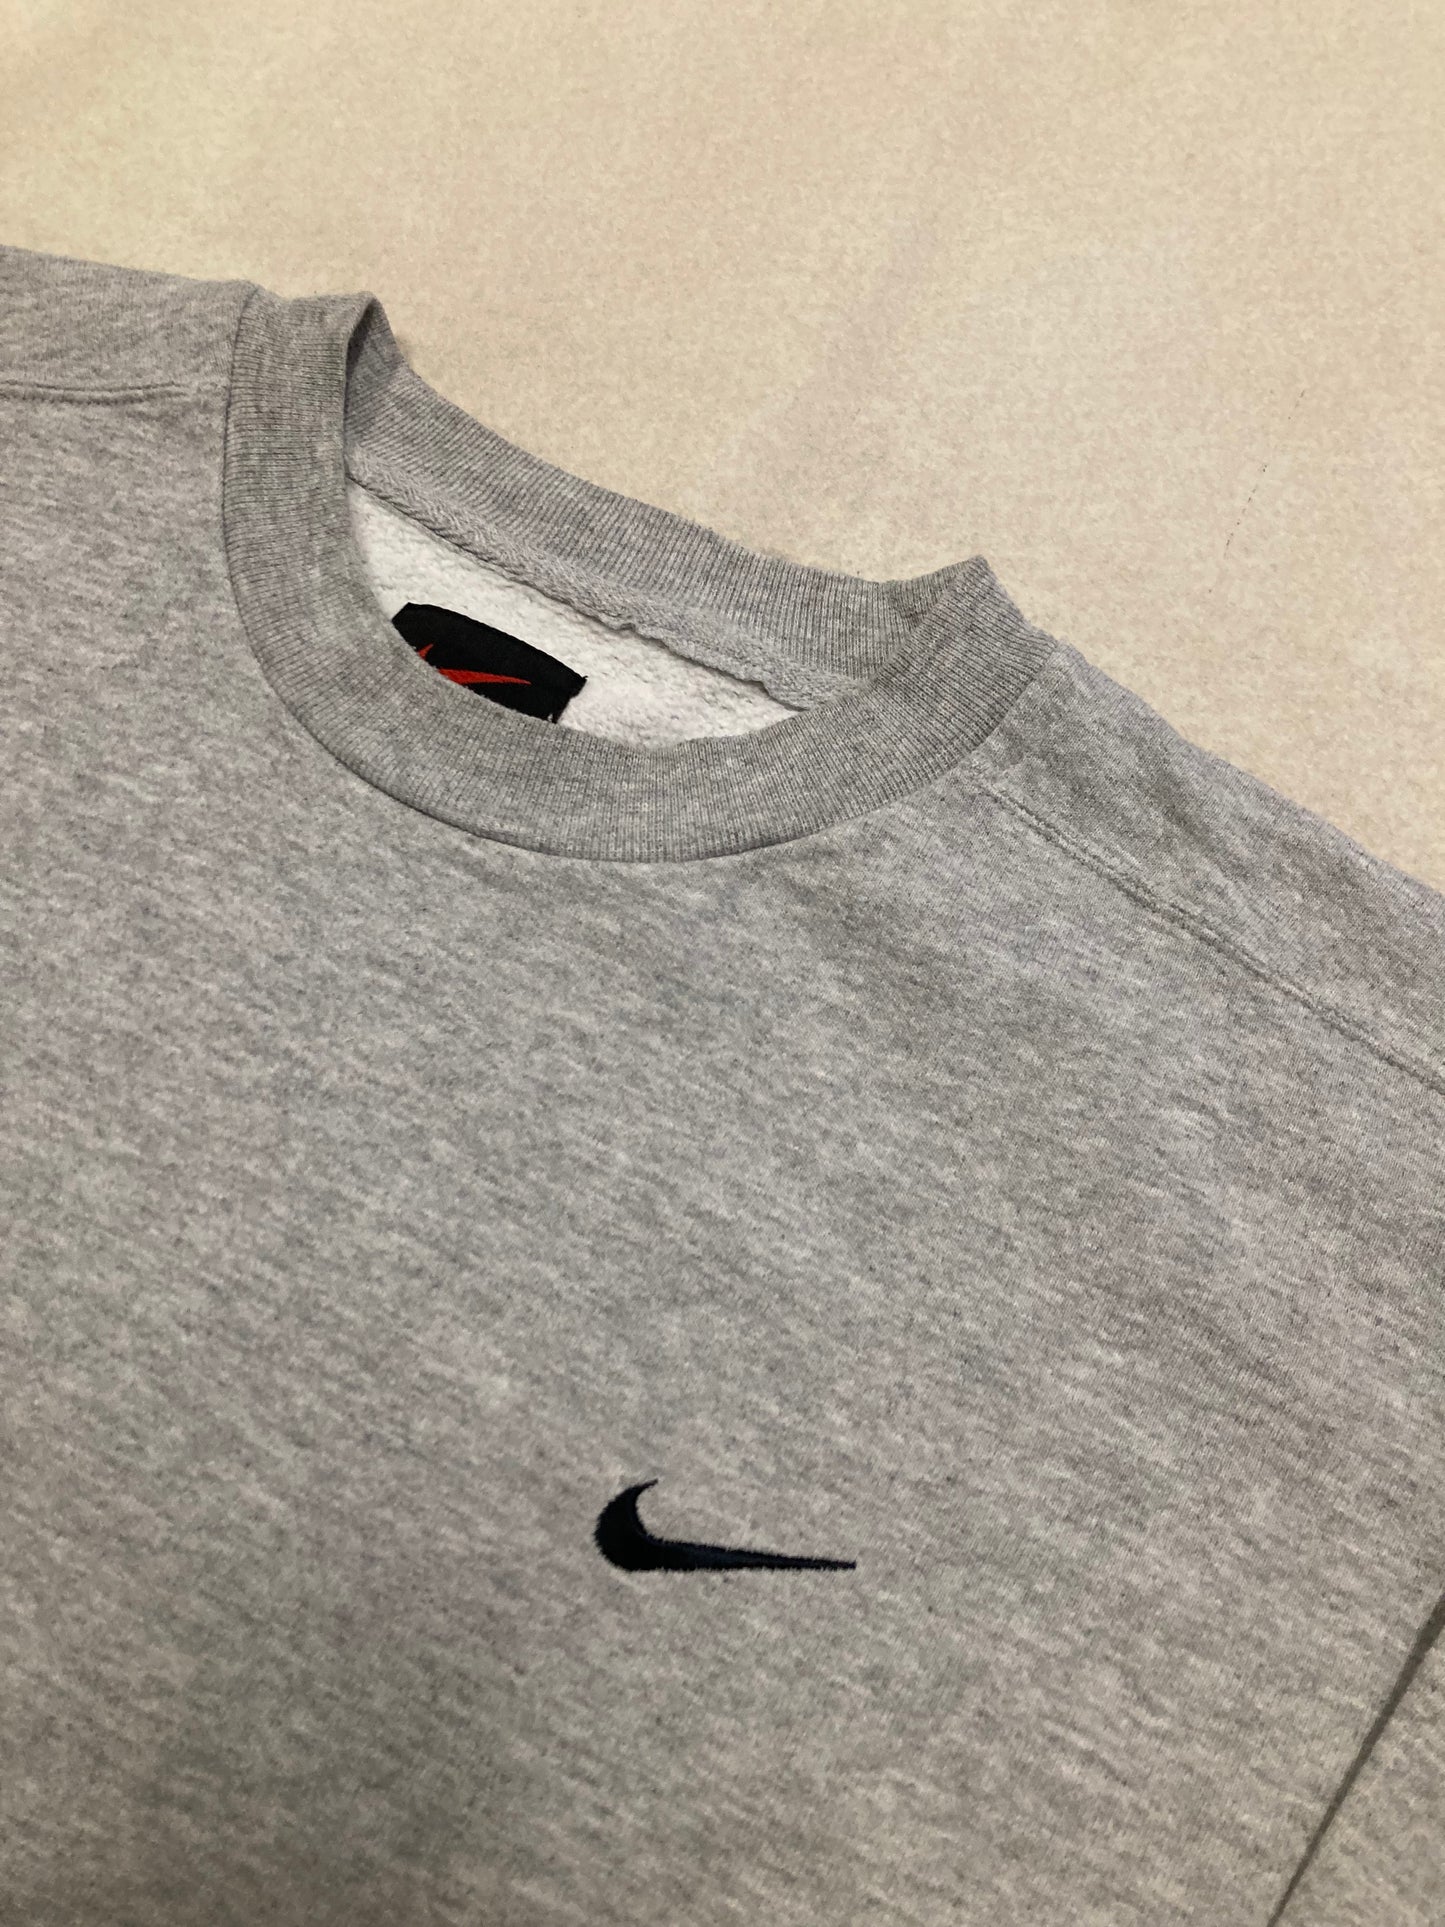 Nike 90s Vintage Sweatshirt - L